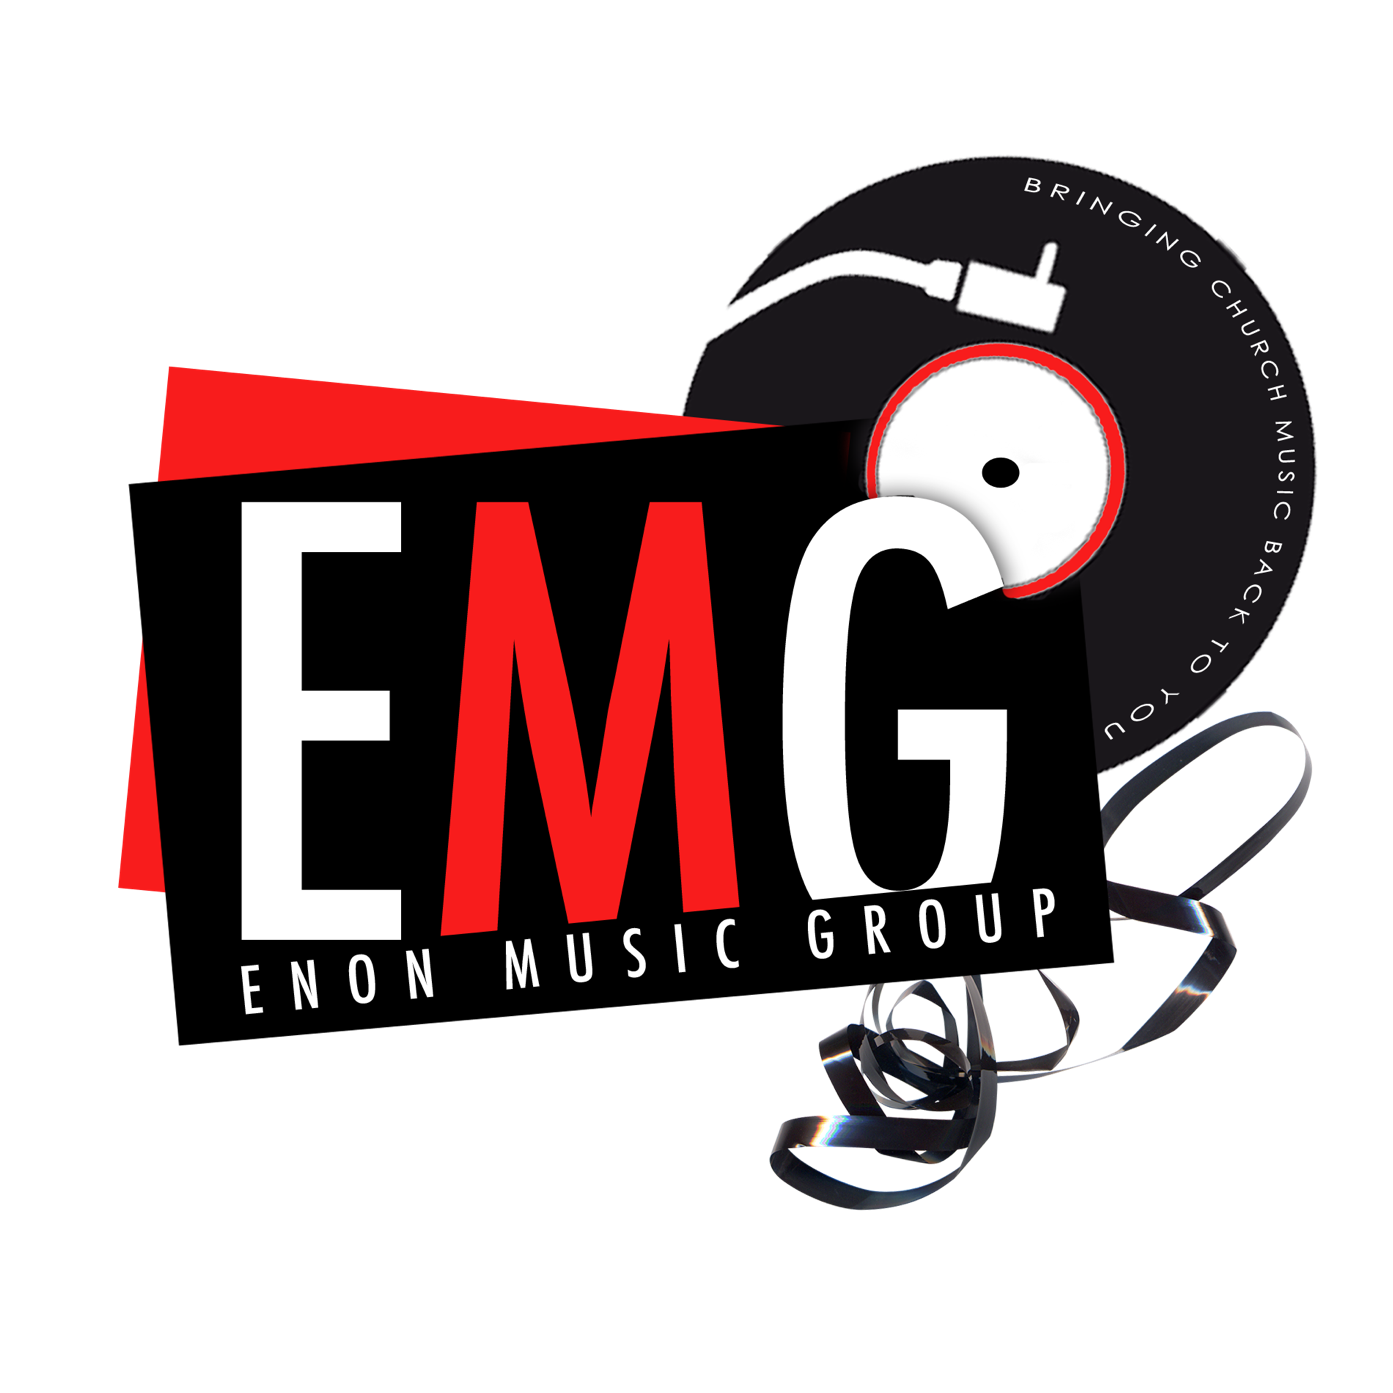 Enon Music Group